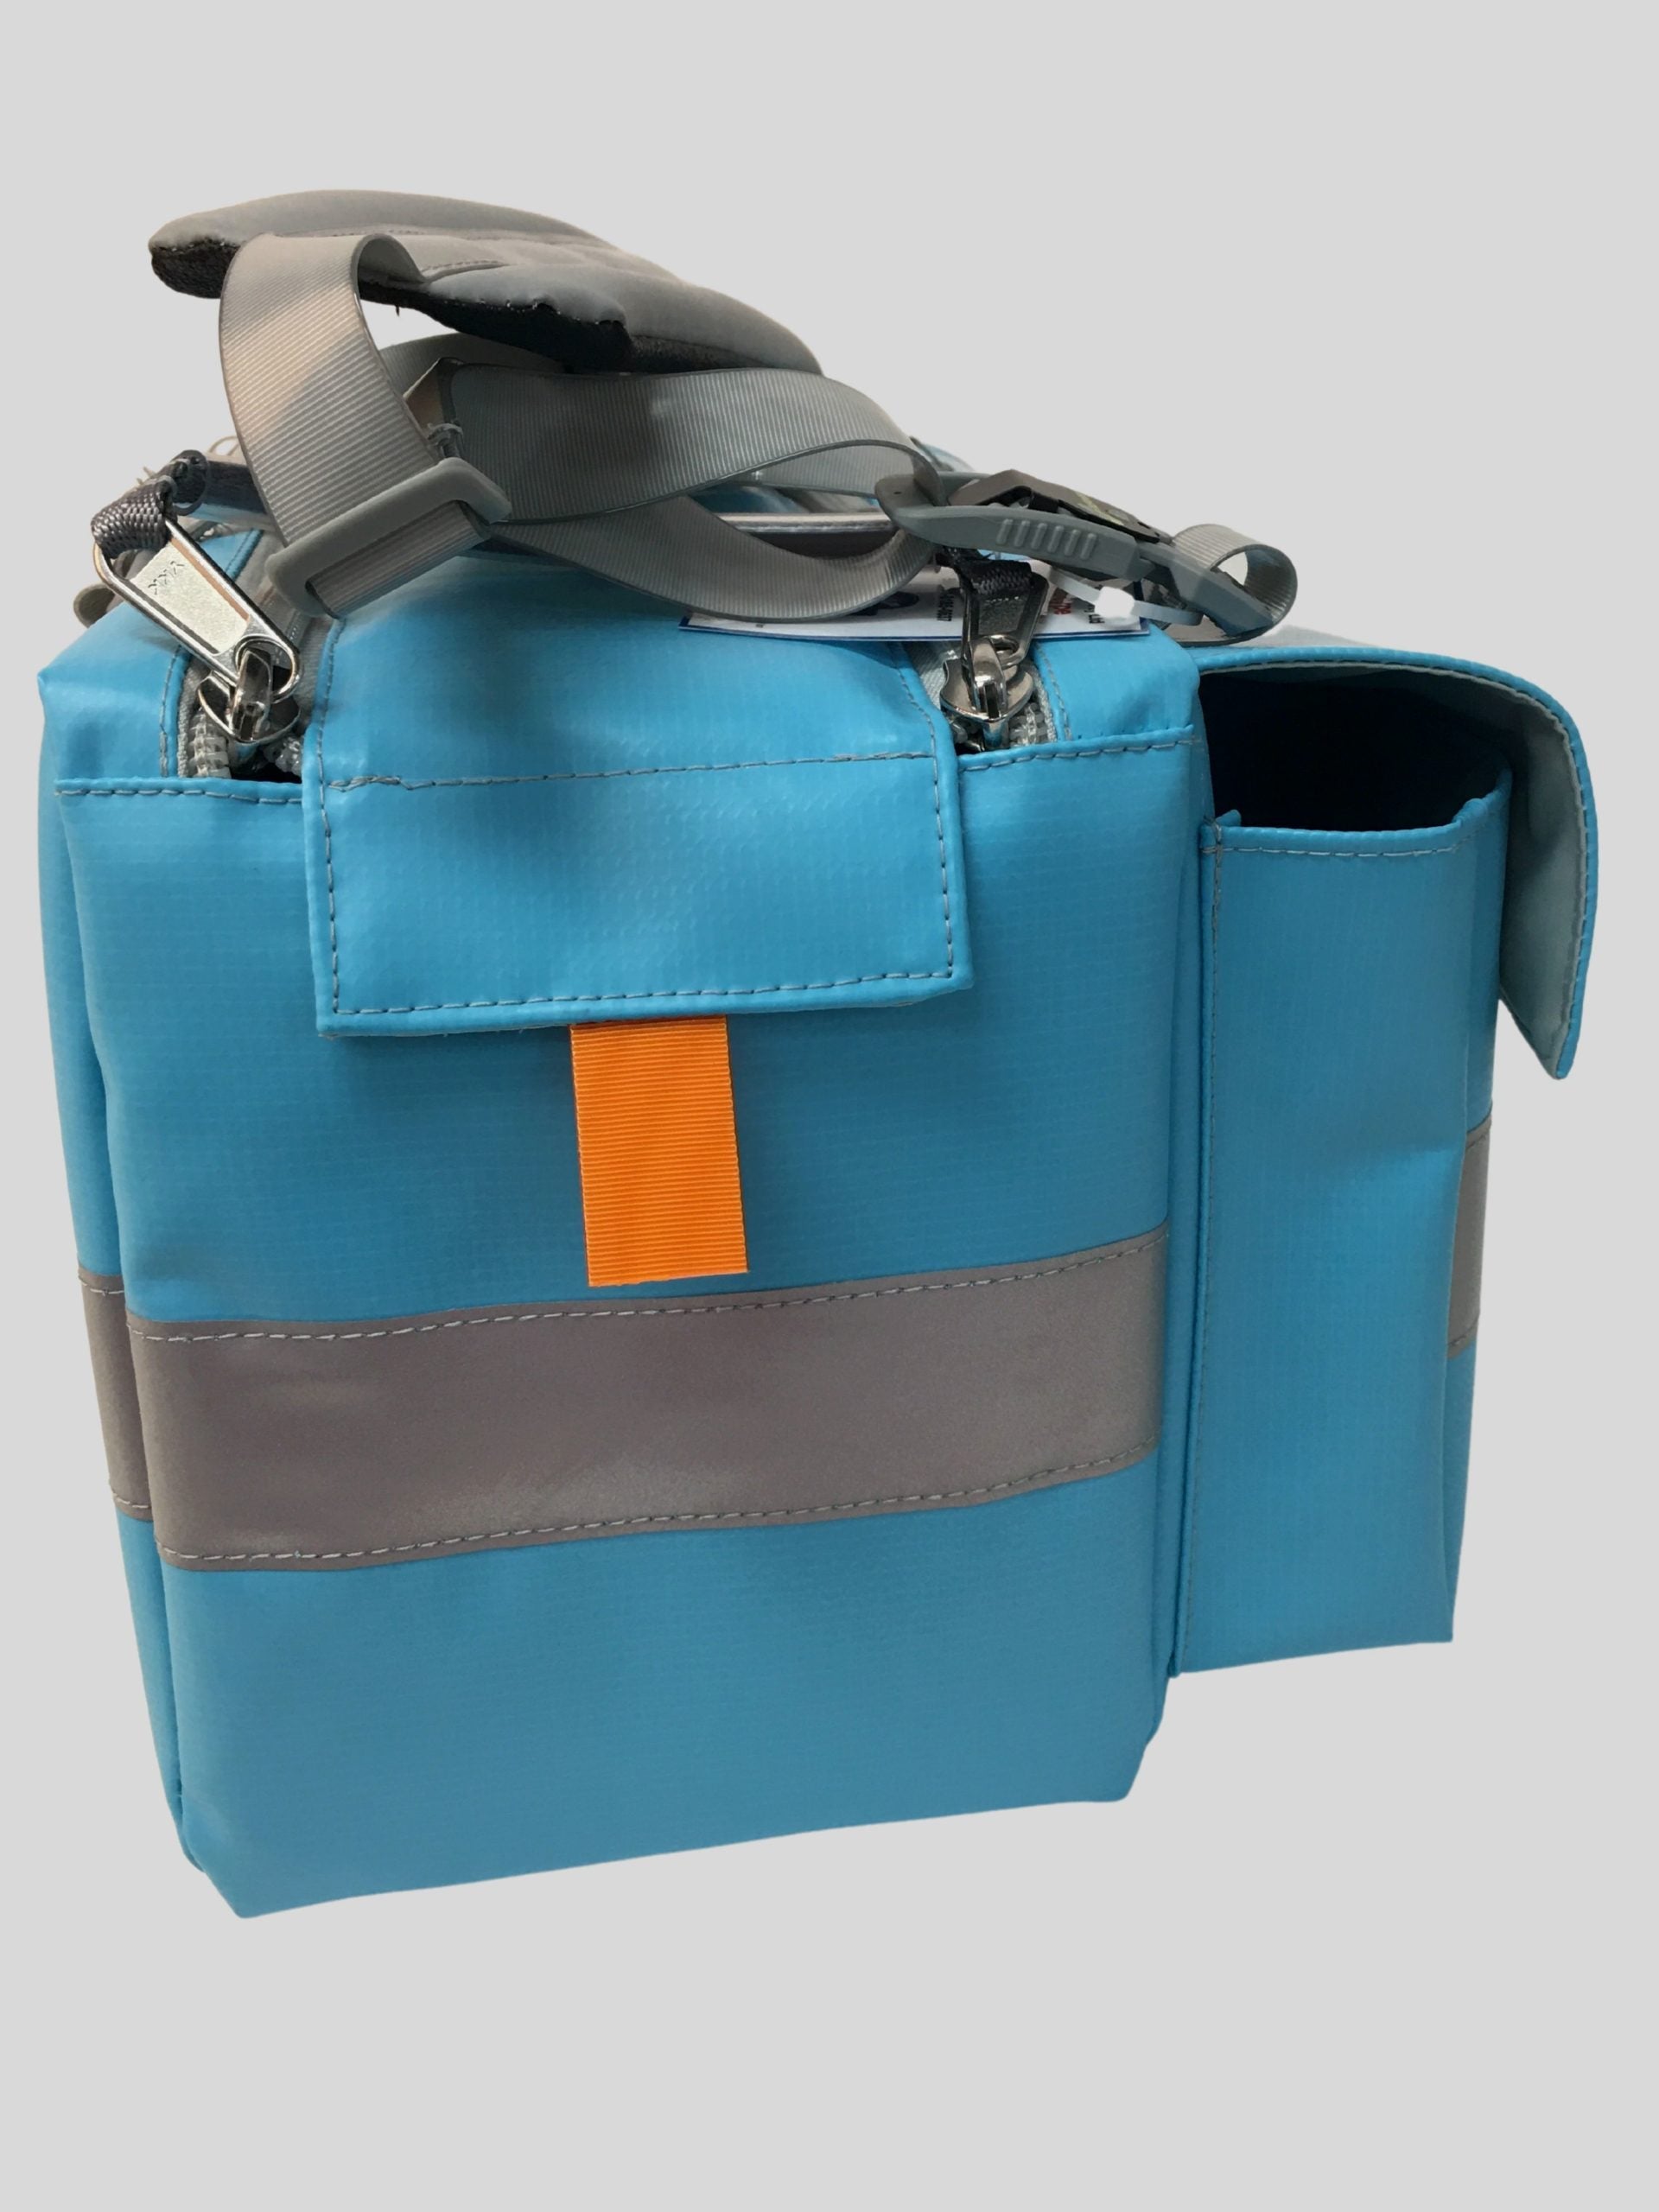 Neann Patient Transport Kit Bag Only - Blue